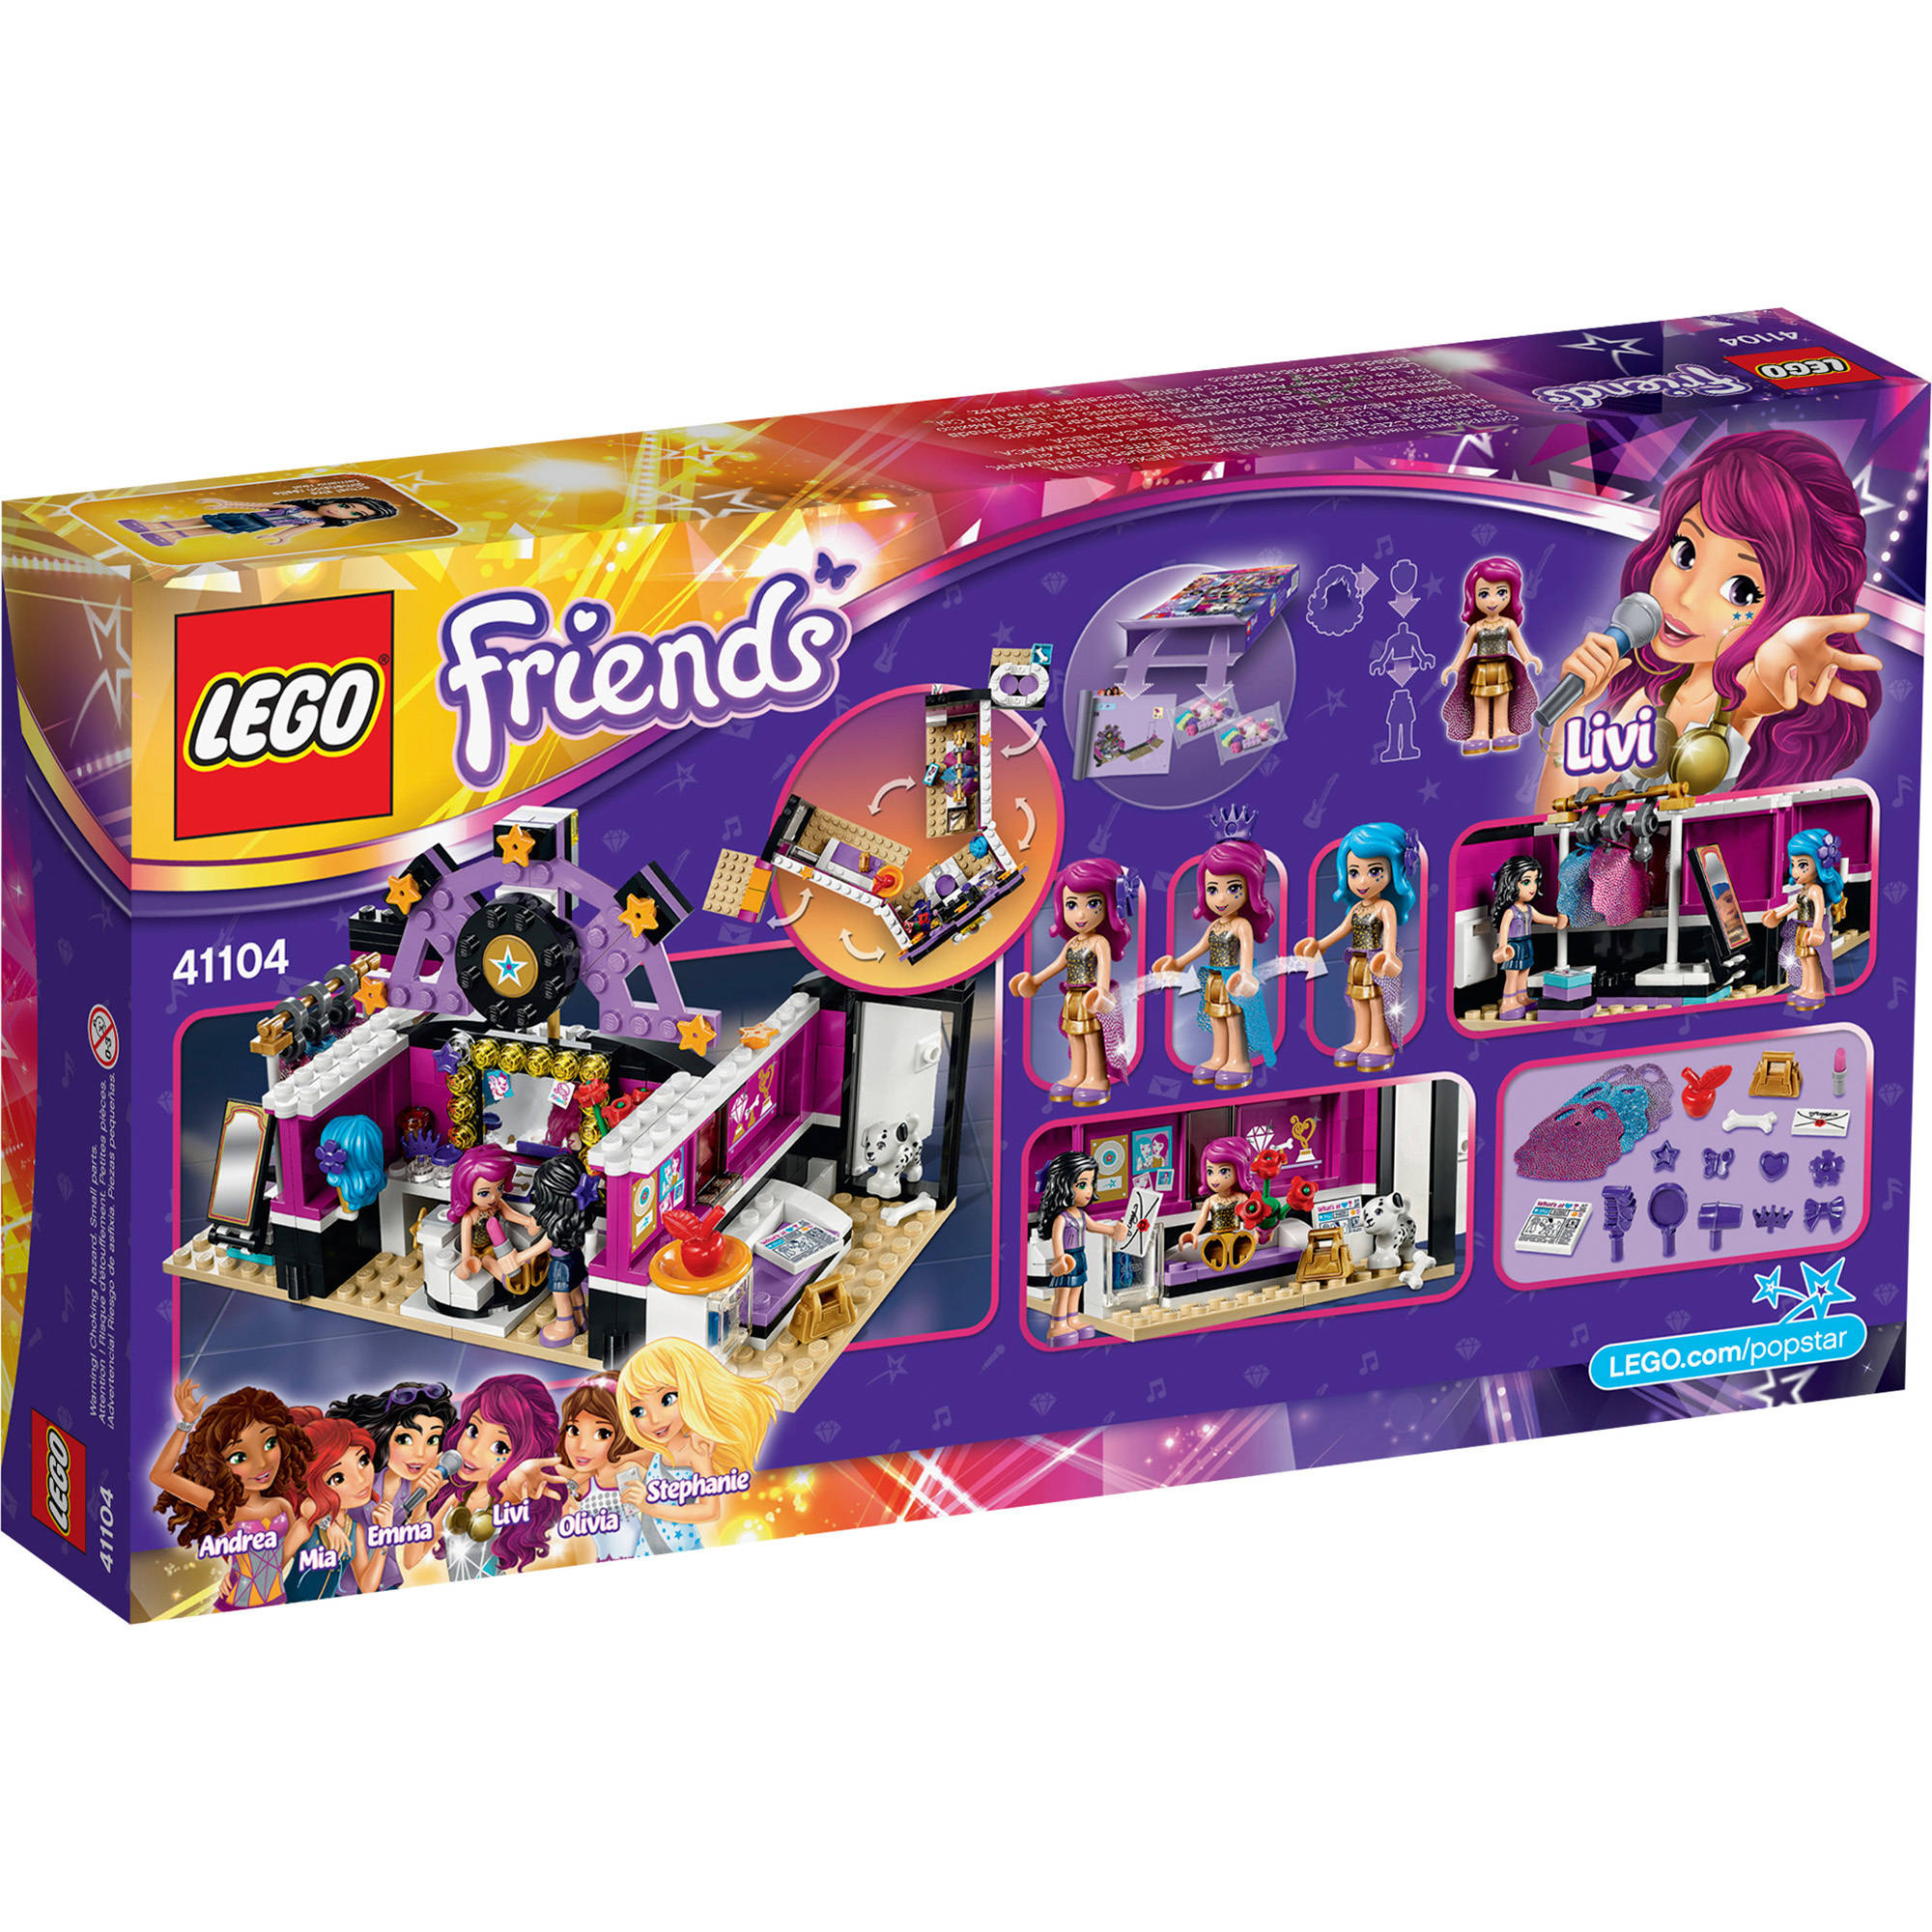 LEGO Friends 41104 Pop Star Dressing Room Building Kit - image 3 of 7